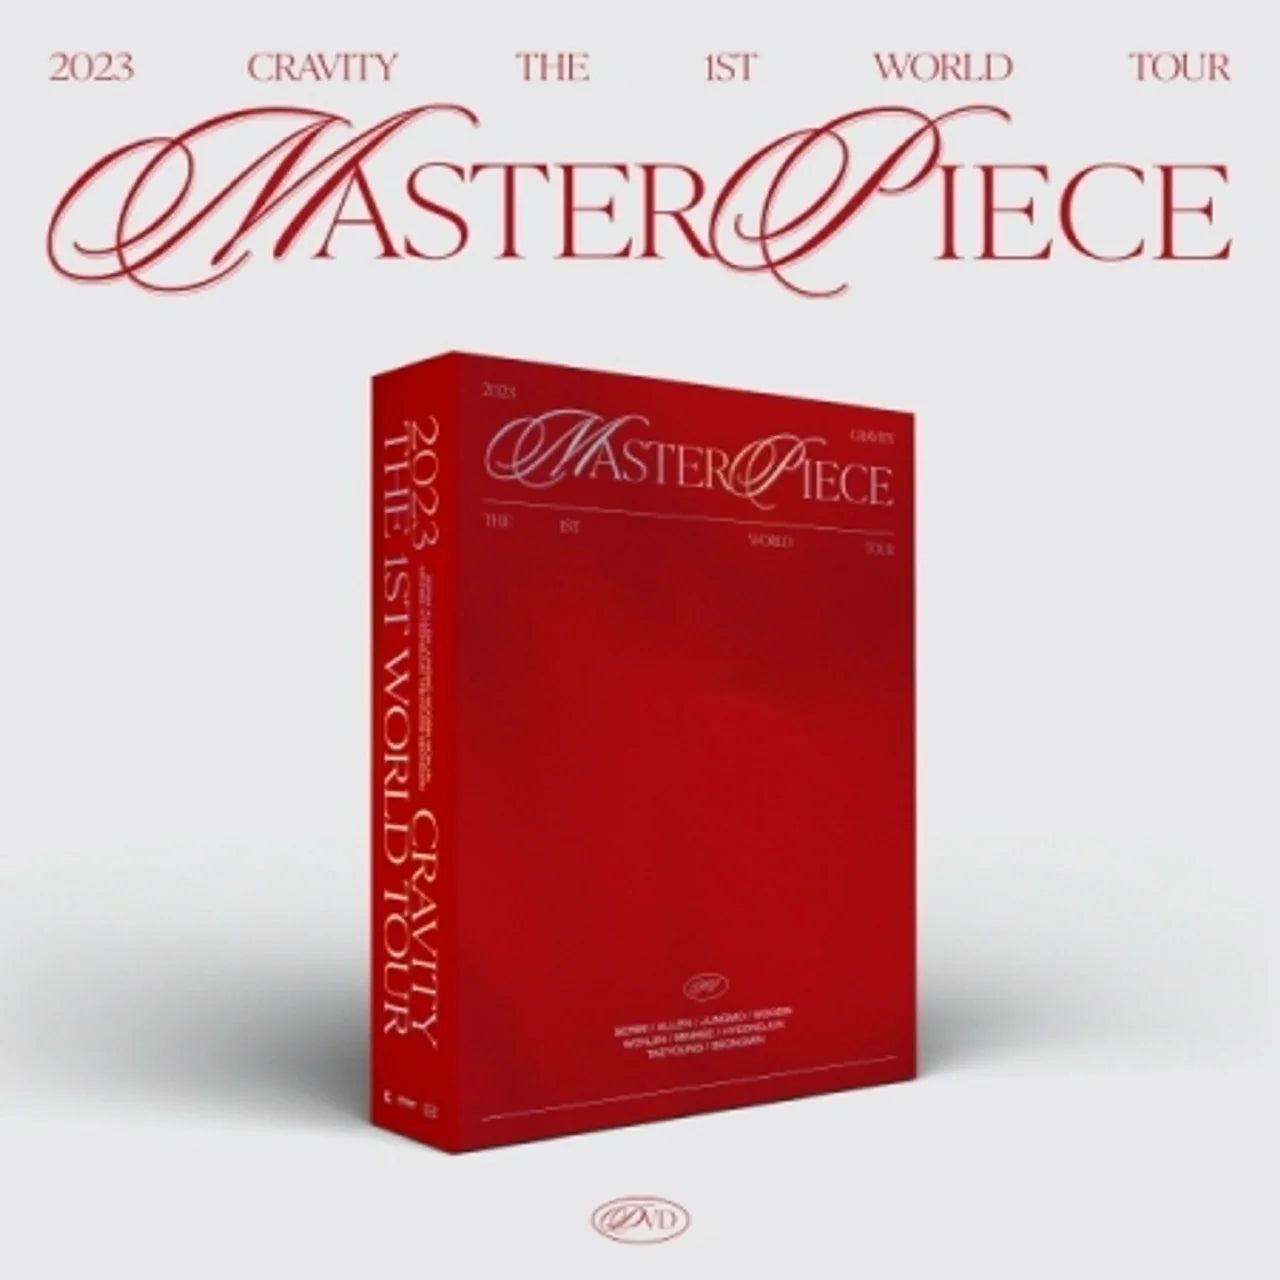 [PRE-ORDER] CRAVITY - MASTERPIECE (The 1st World Tour) DVD